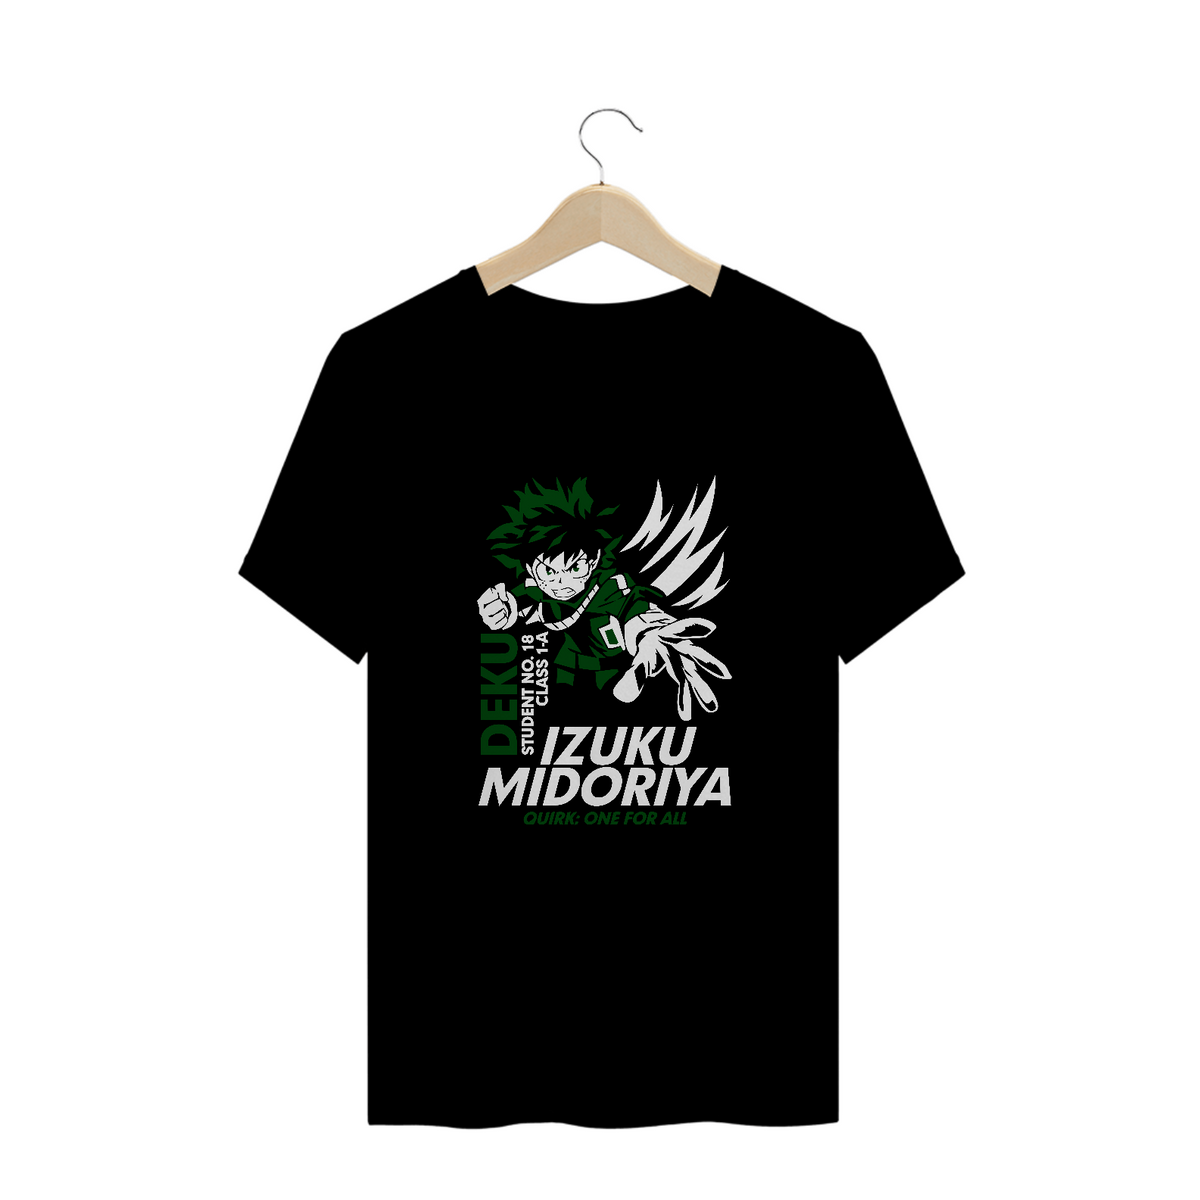 Nome do produto: Camisa Midoriya II